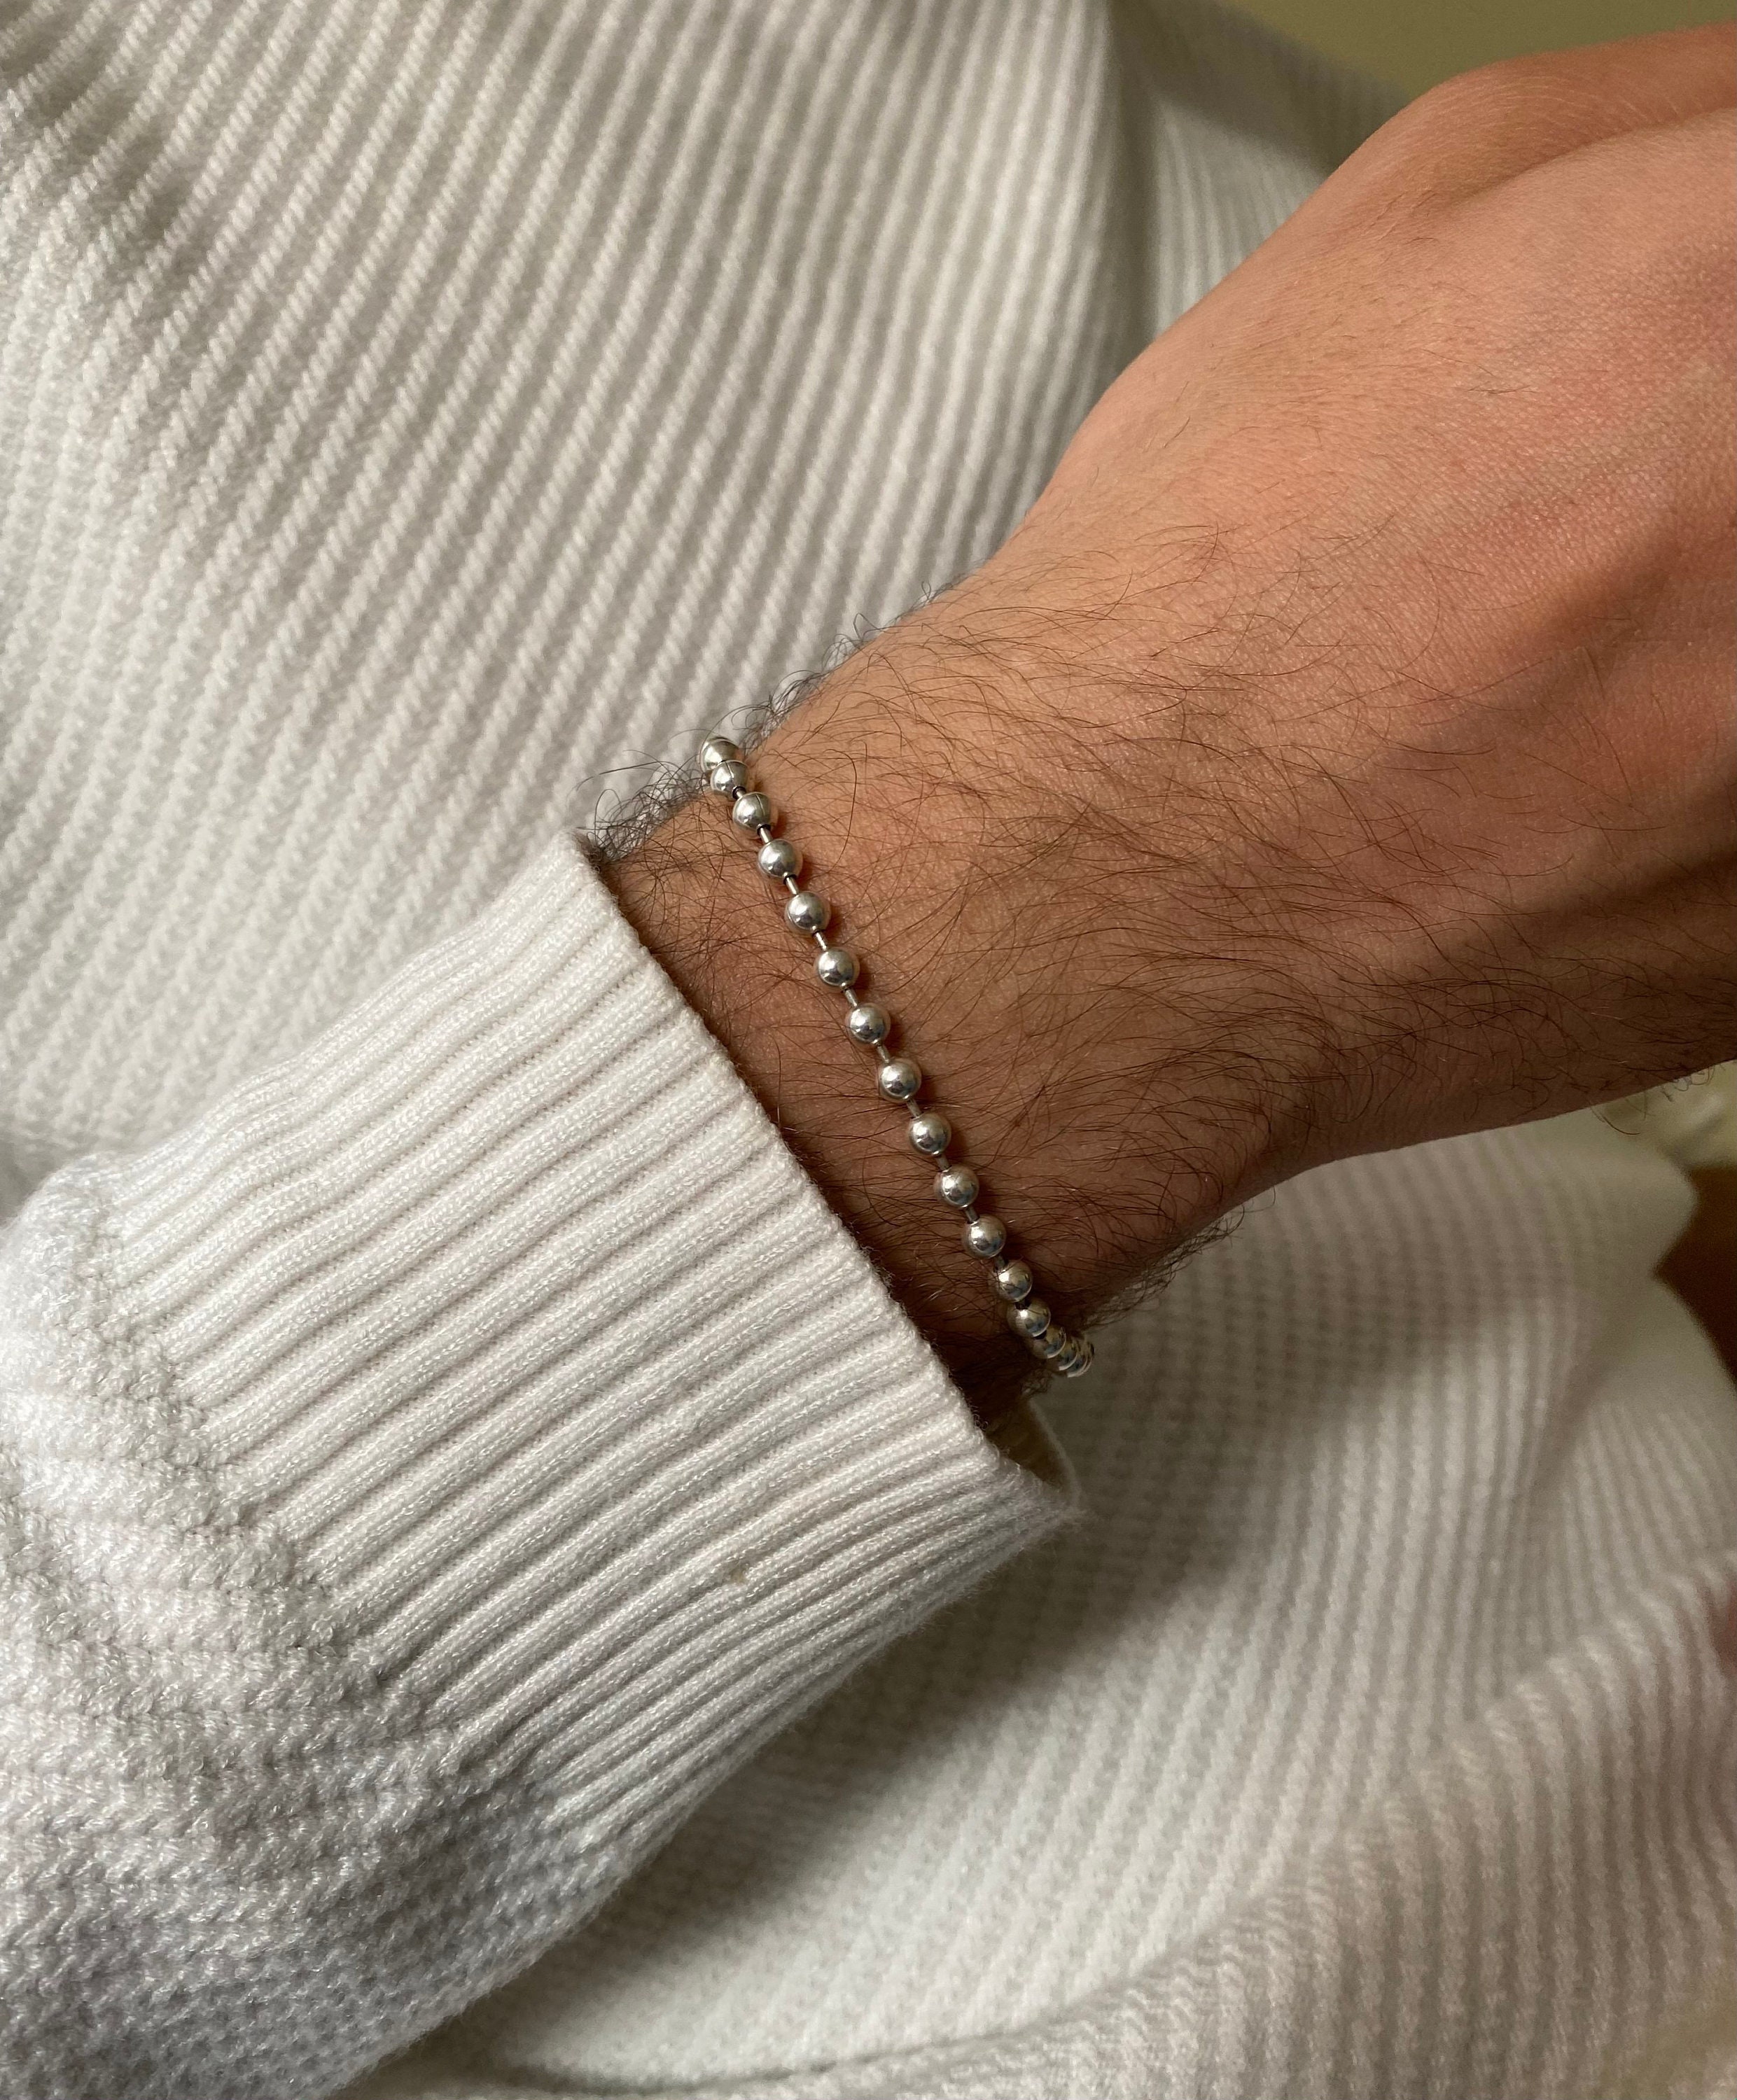 Is this bracelet too big? : r/jewelry